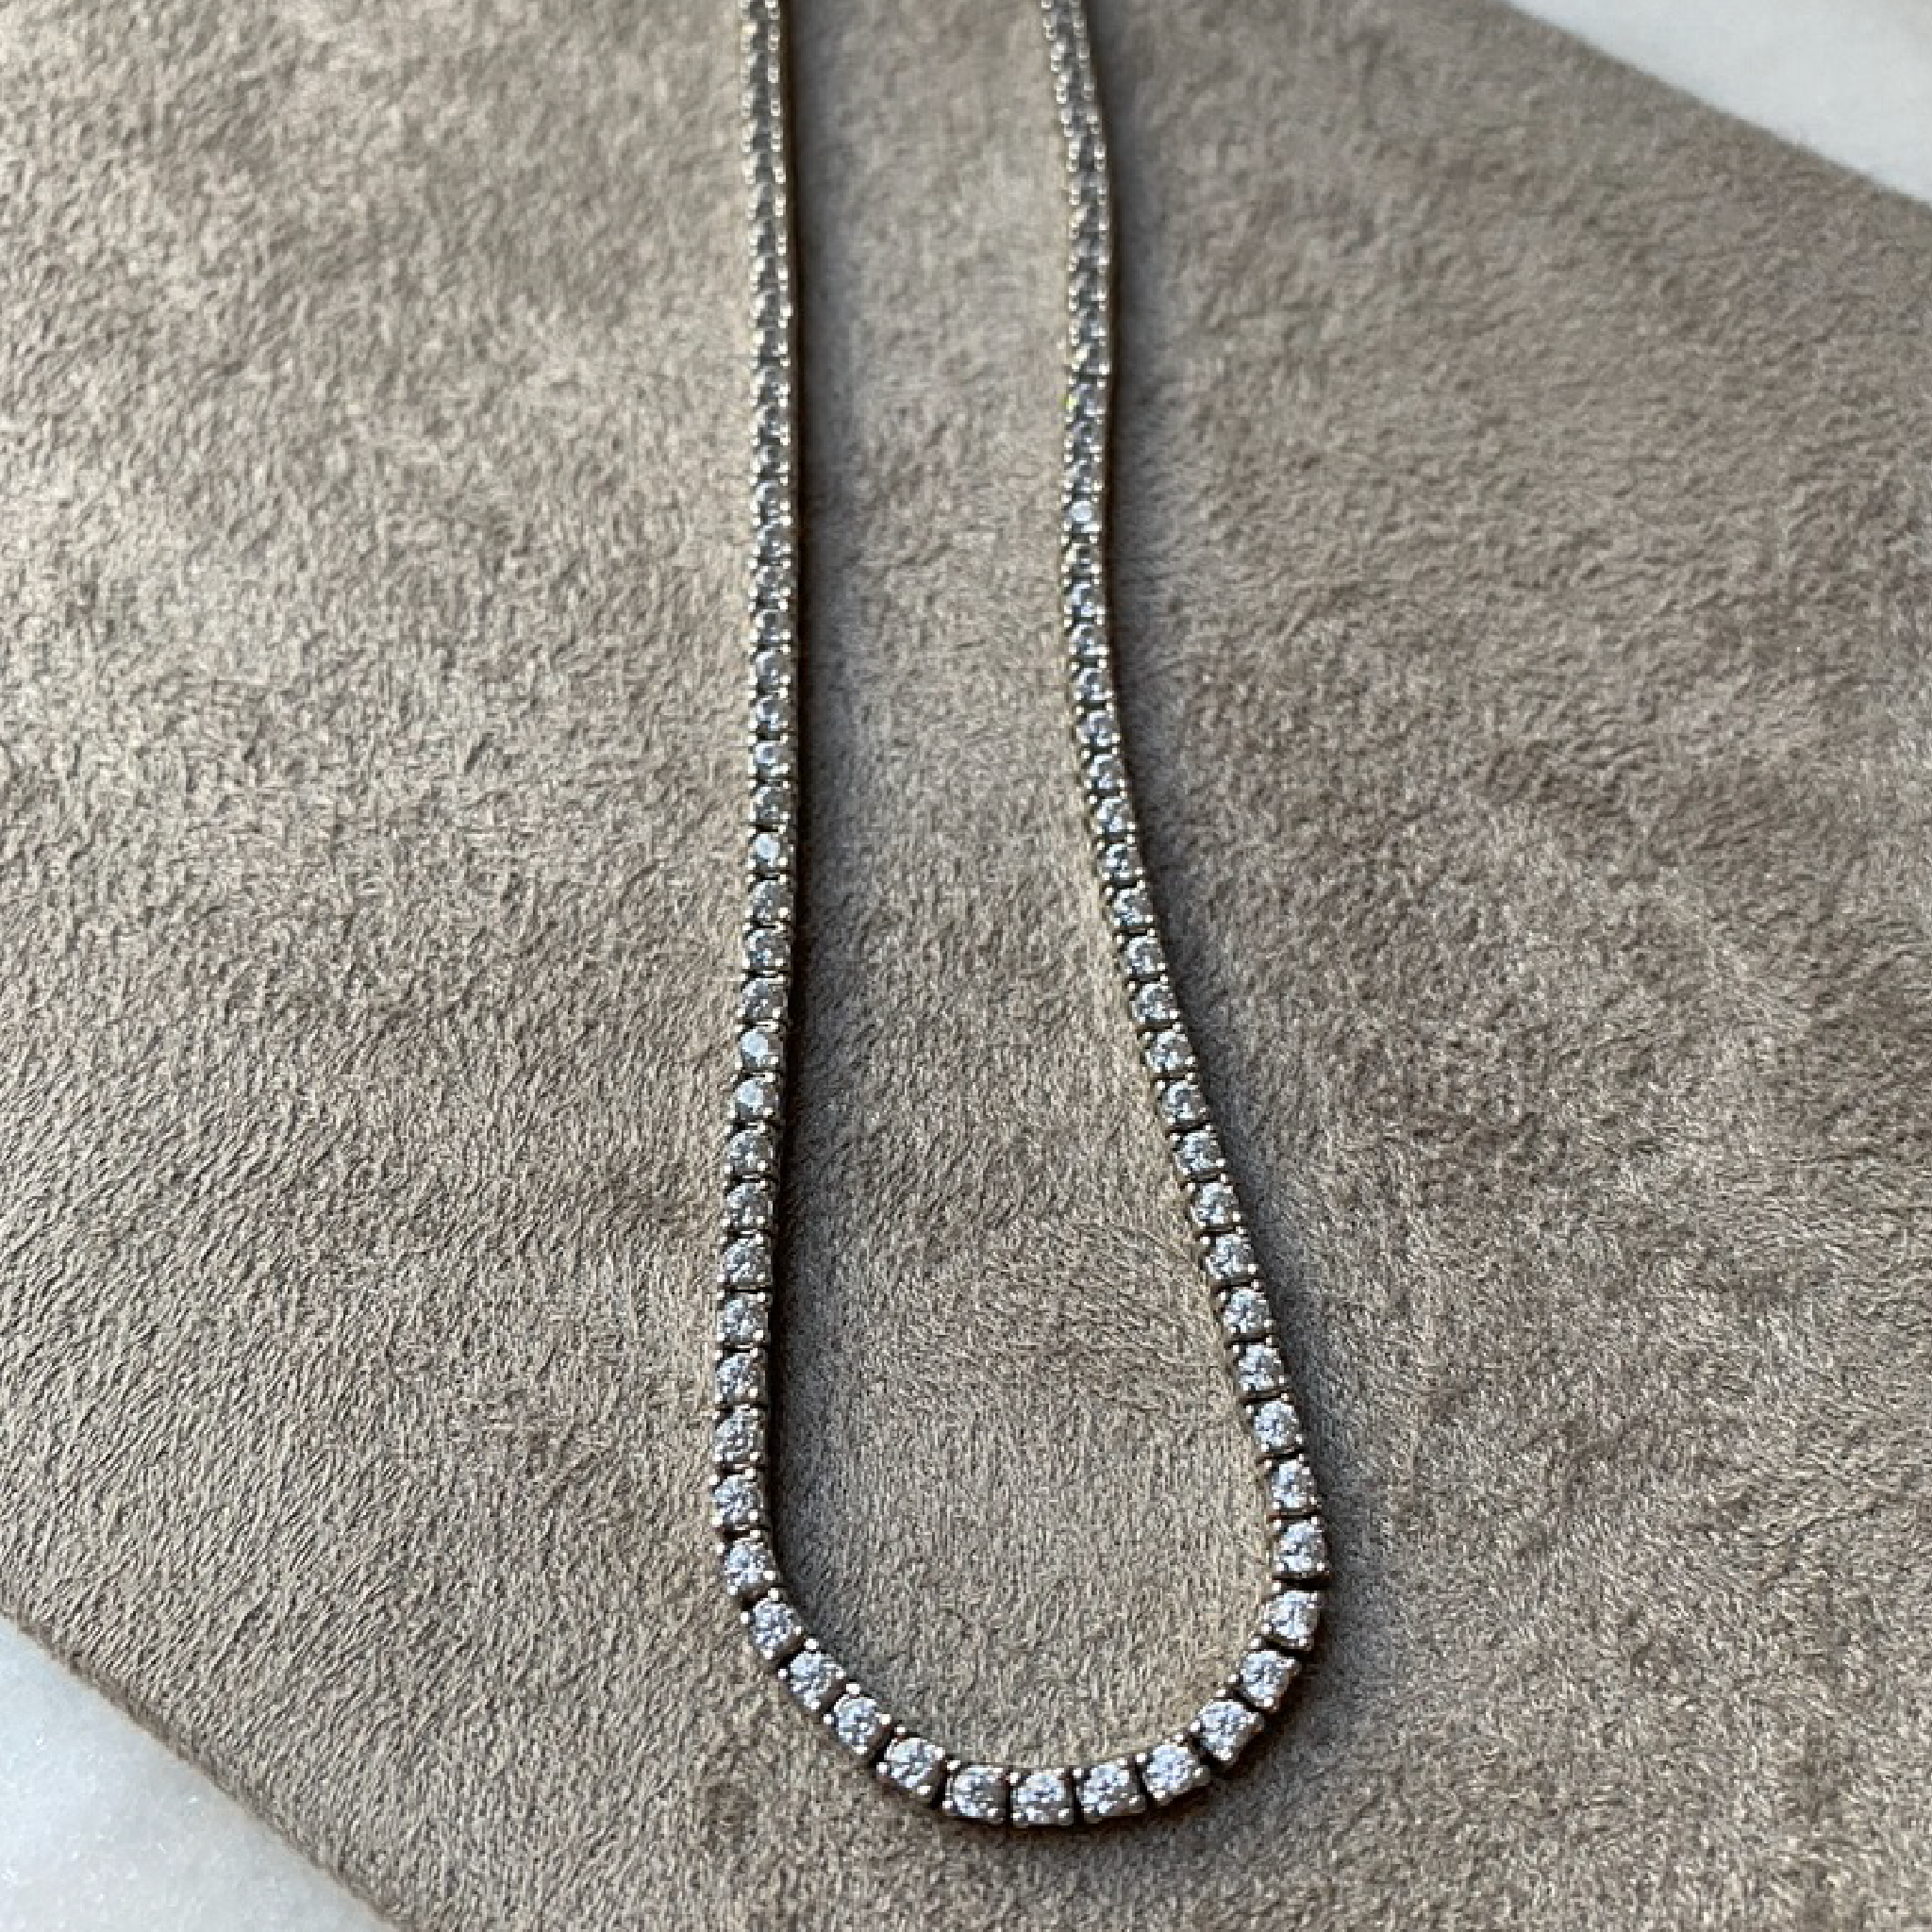 6.5 ct Classic Diamond Tennis Necklace